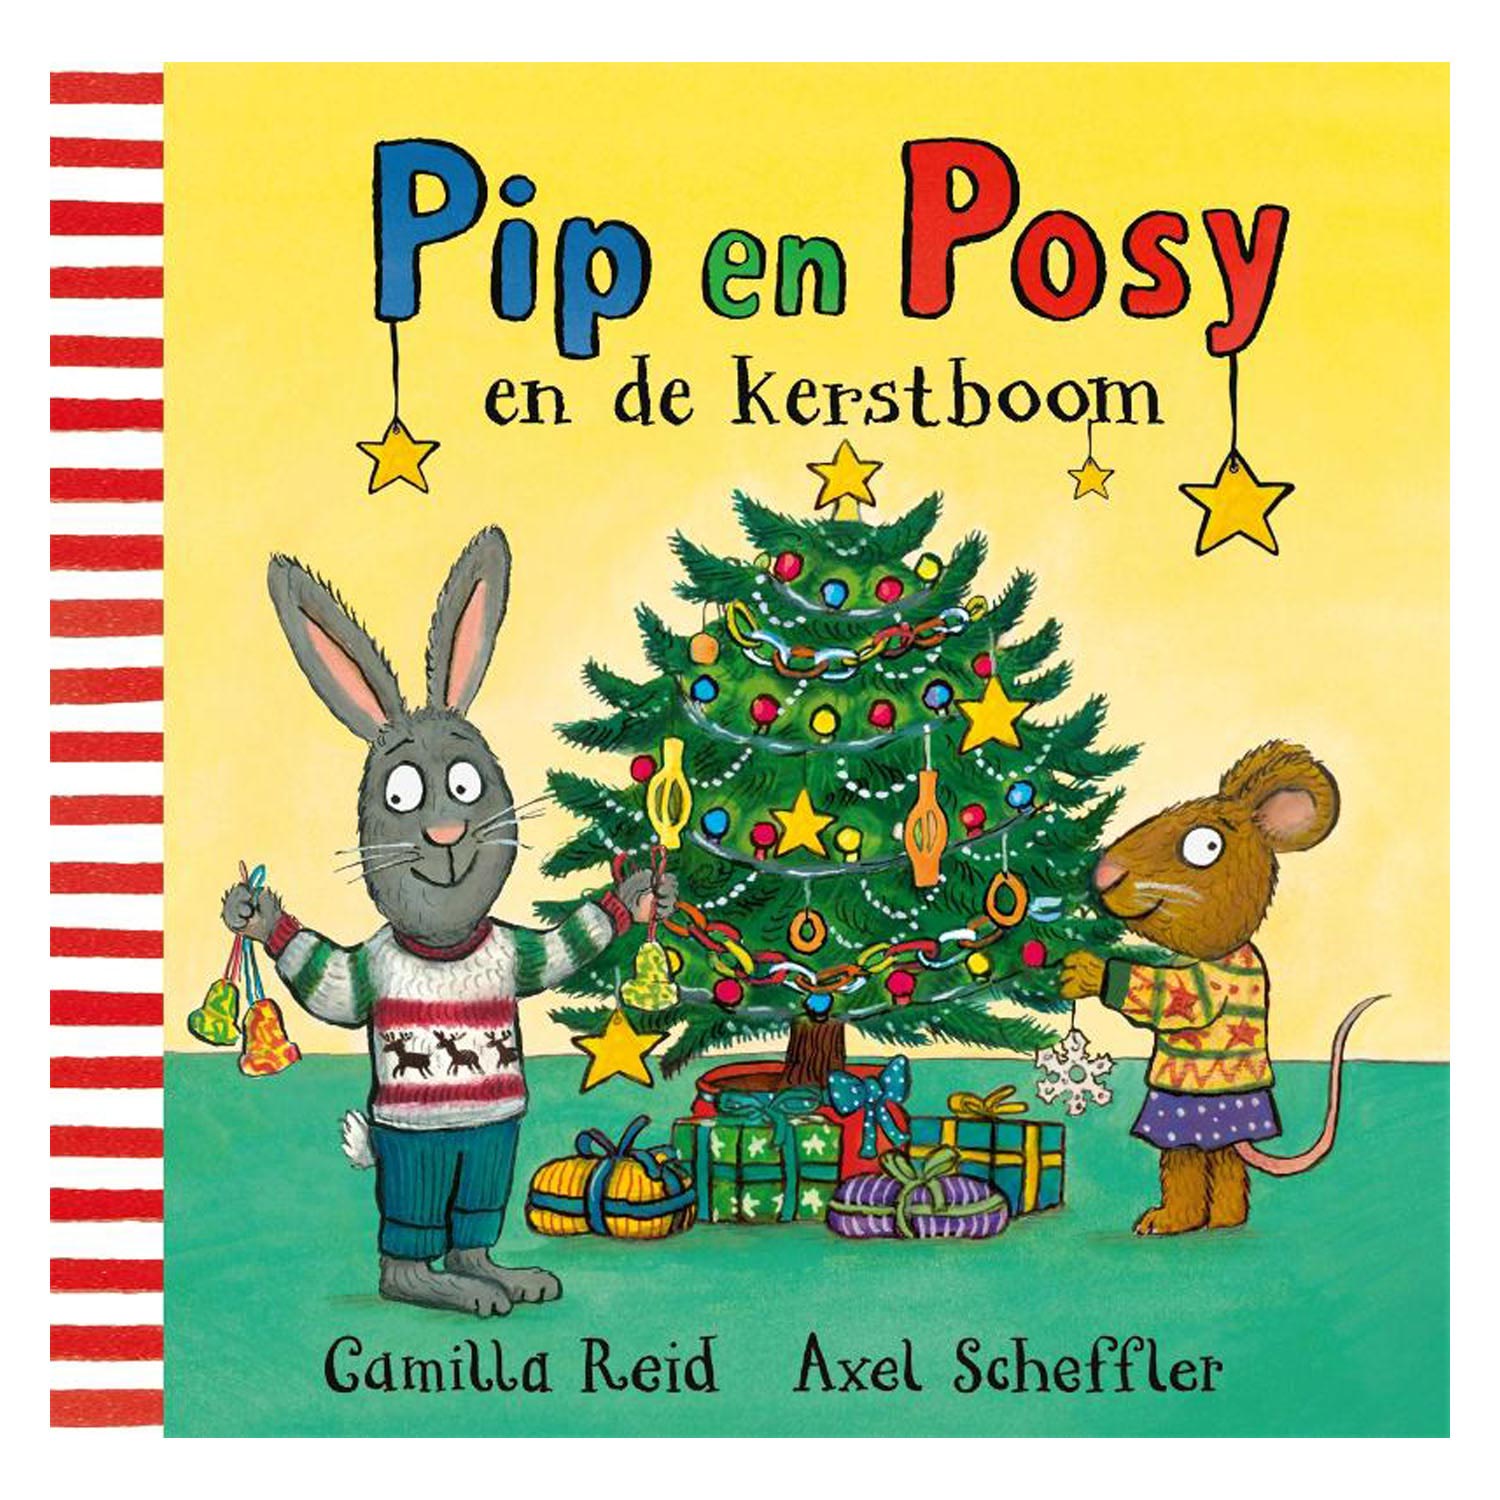 Pip en Posy en de kerstboom